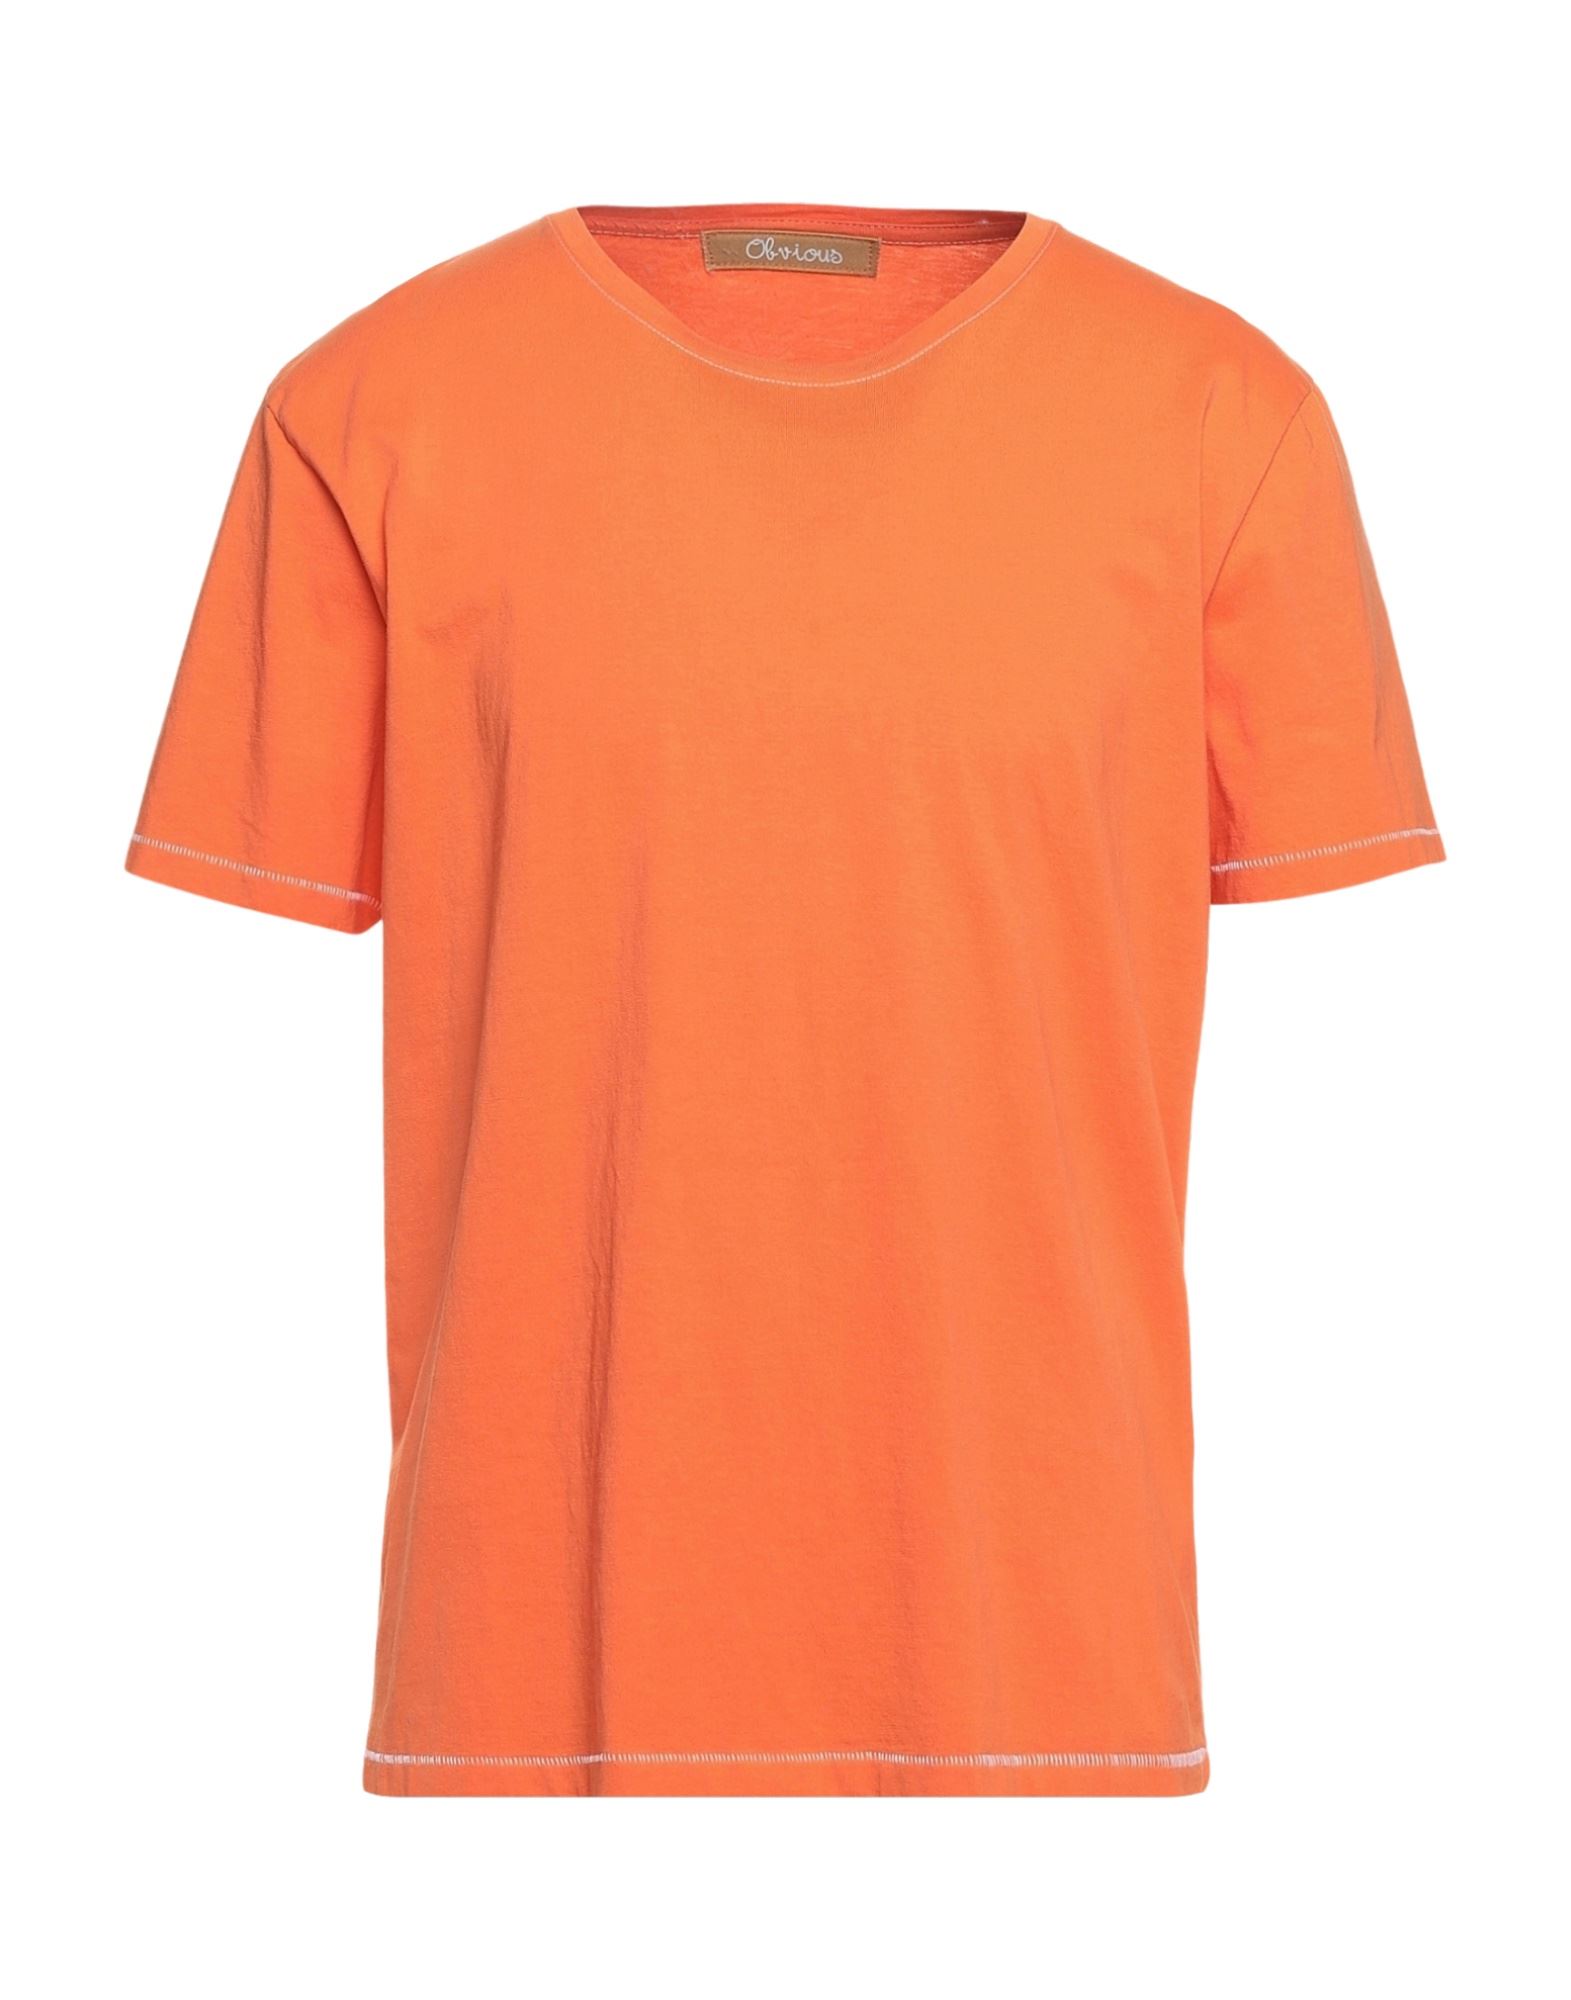 Obvious Basic T-shirts In Orange